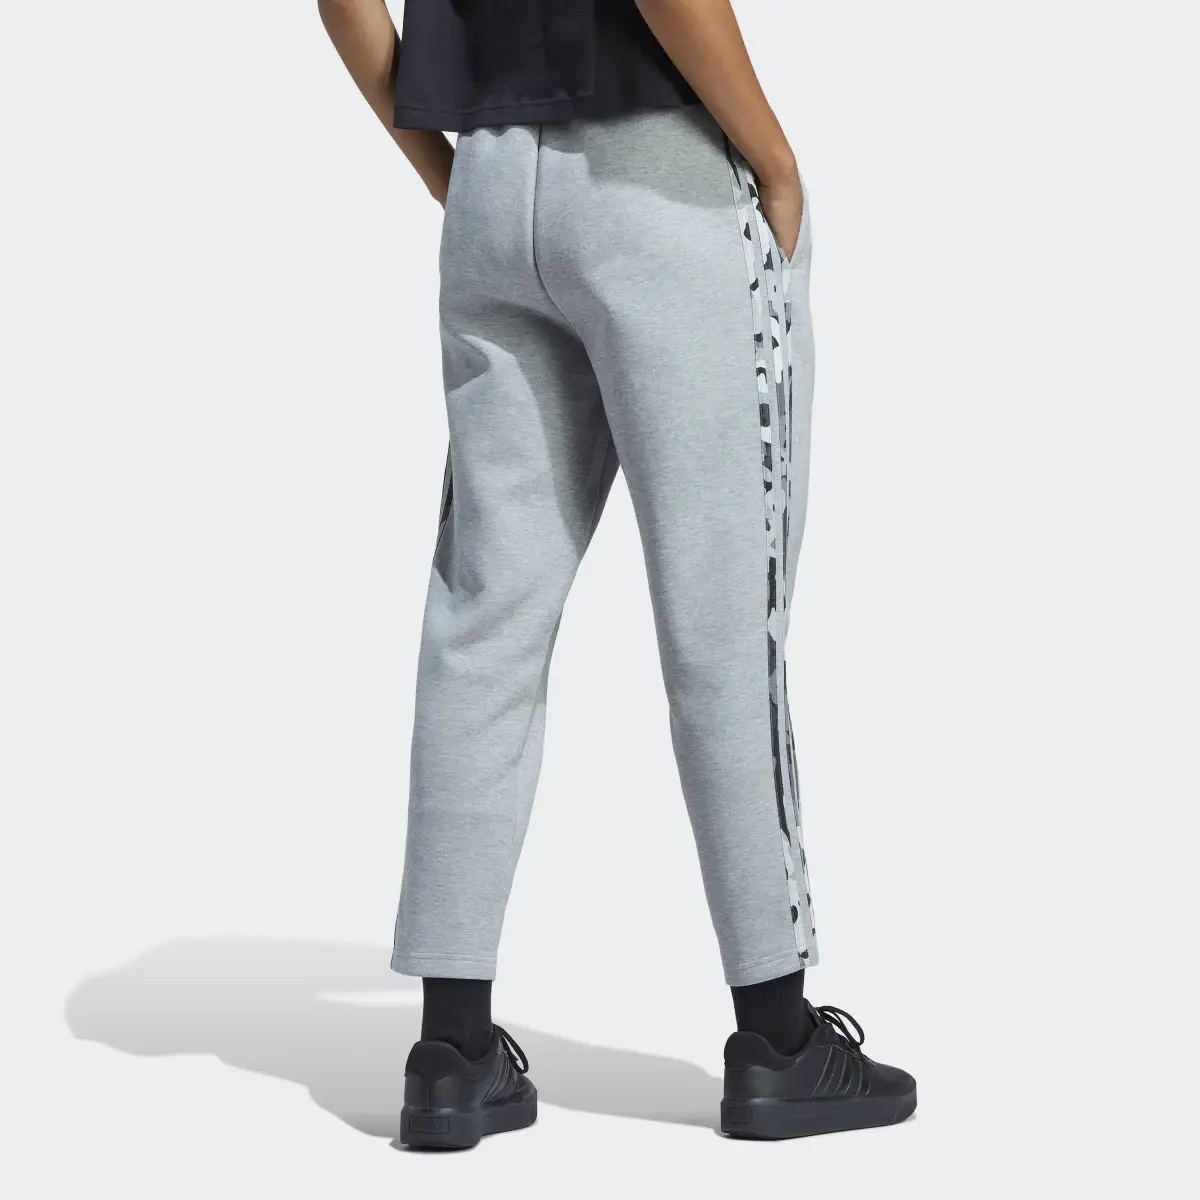 Adidas Graphic Pants. 2